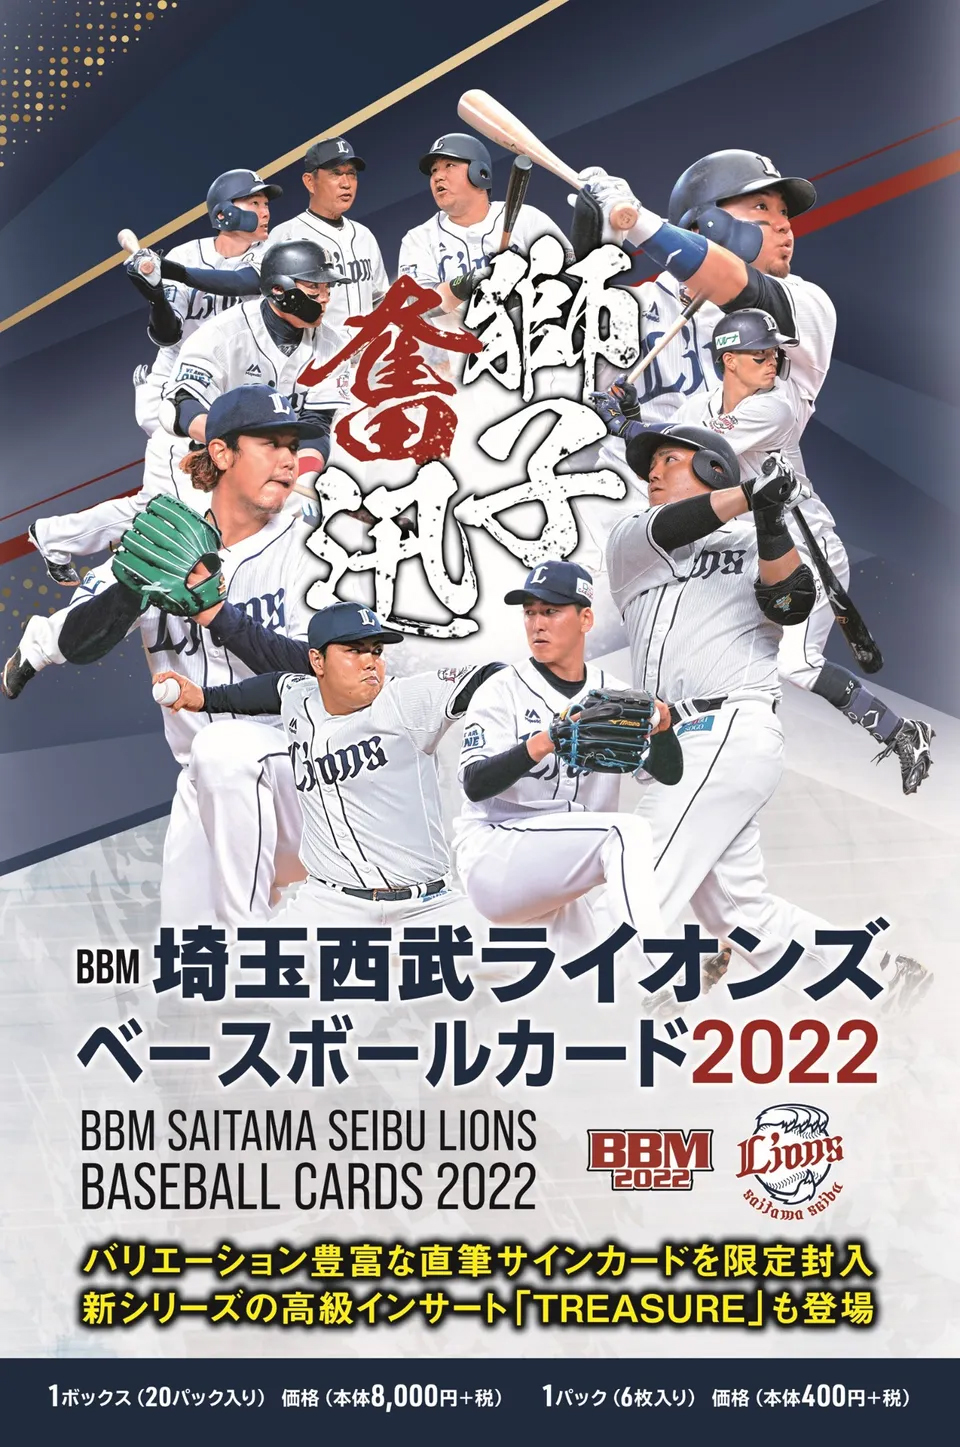 2022 BBM GENESIS 源田壮亮 6 20 直筆サイン 西武ライオンズ - 記念グッズ